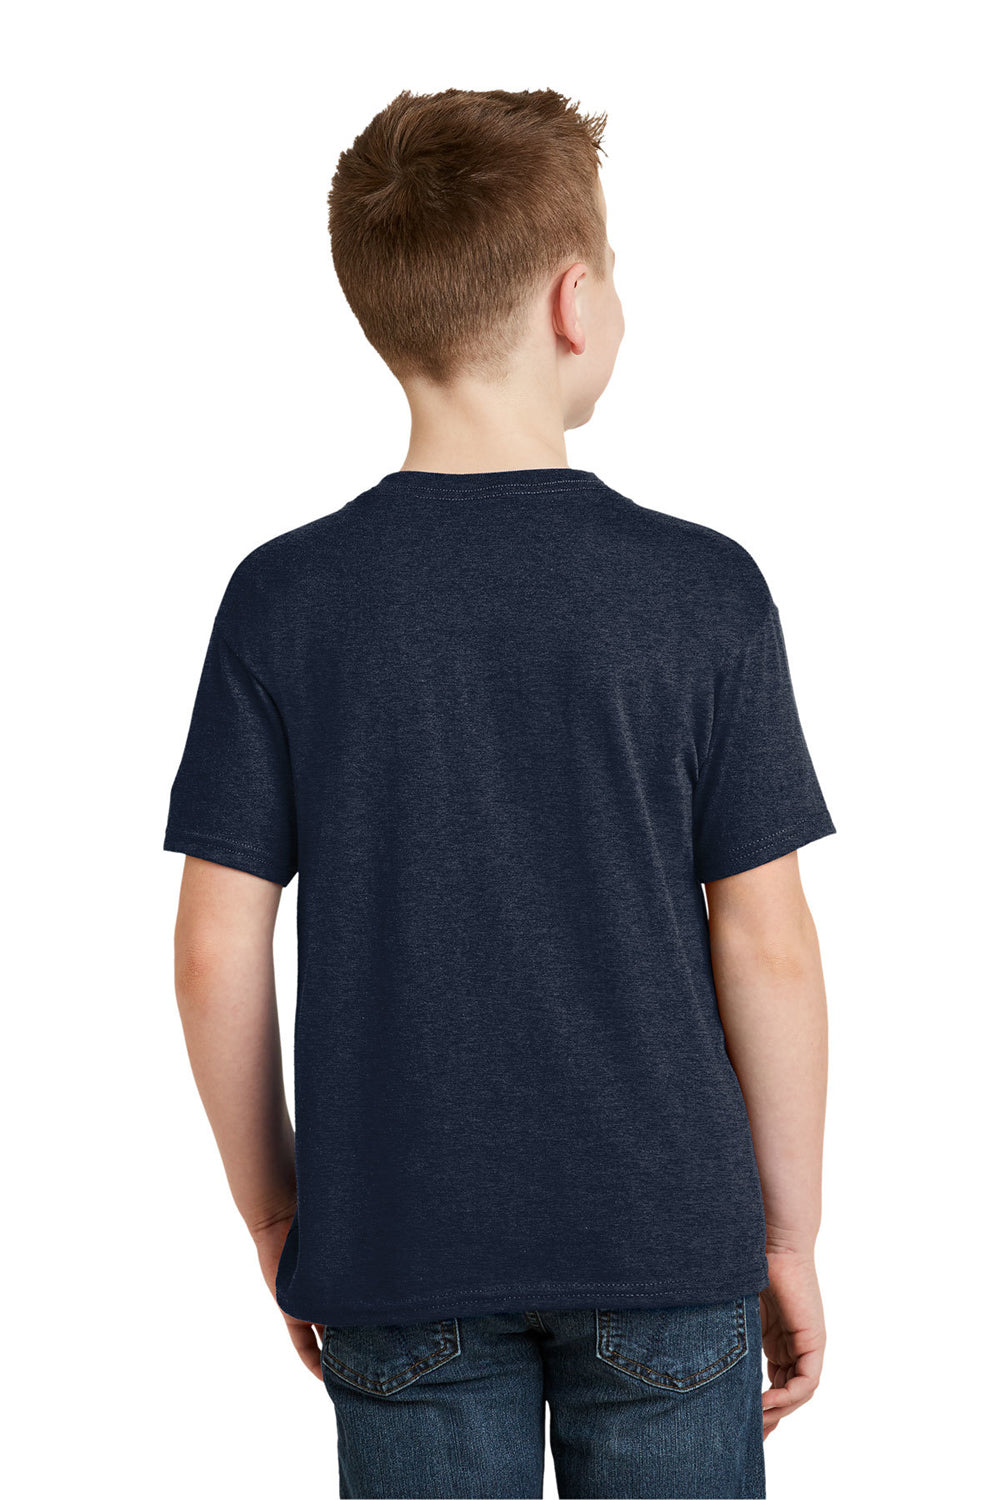 Hanes 5370 Youth EcoSmart Short Sleeve Crewneck T-Shirt Heather Navy Blue Back